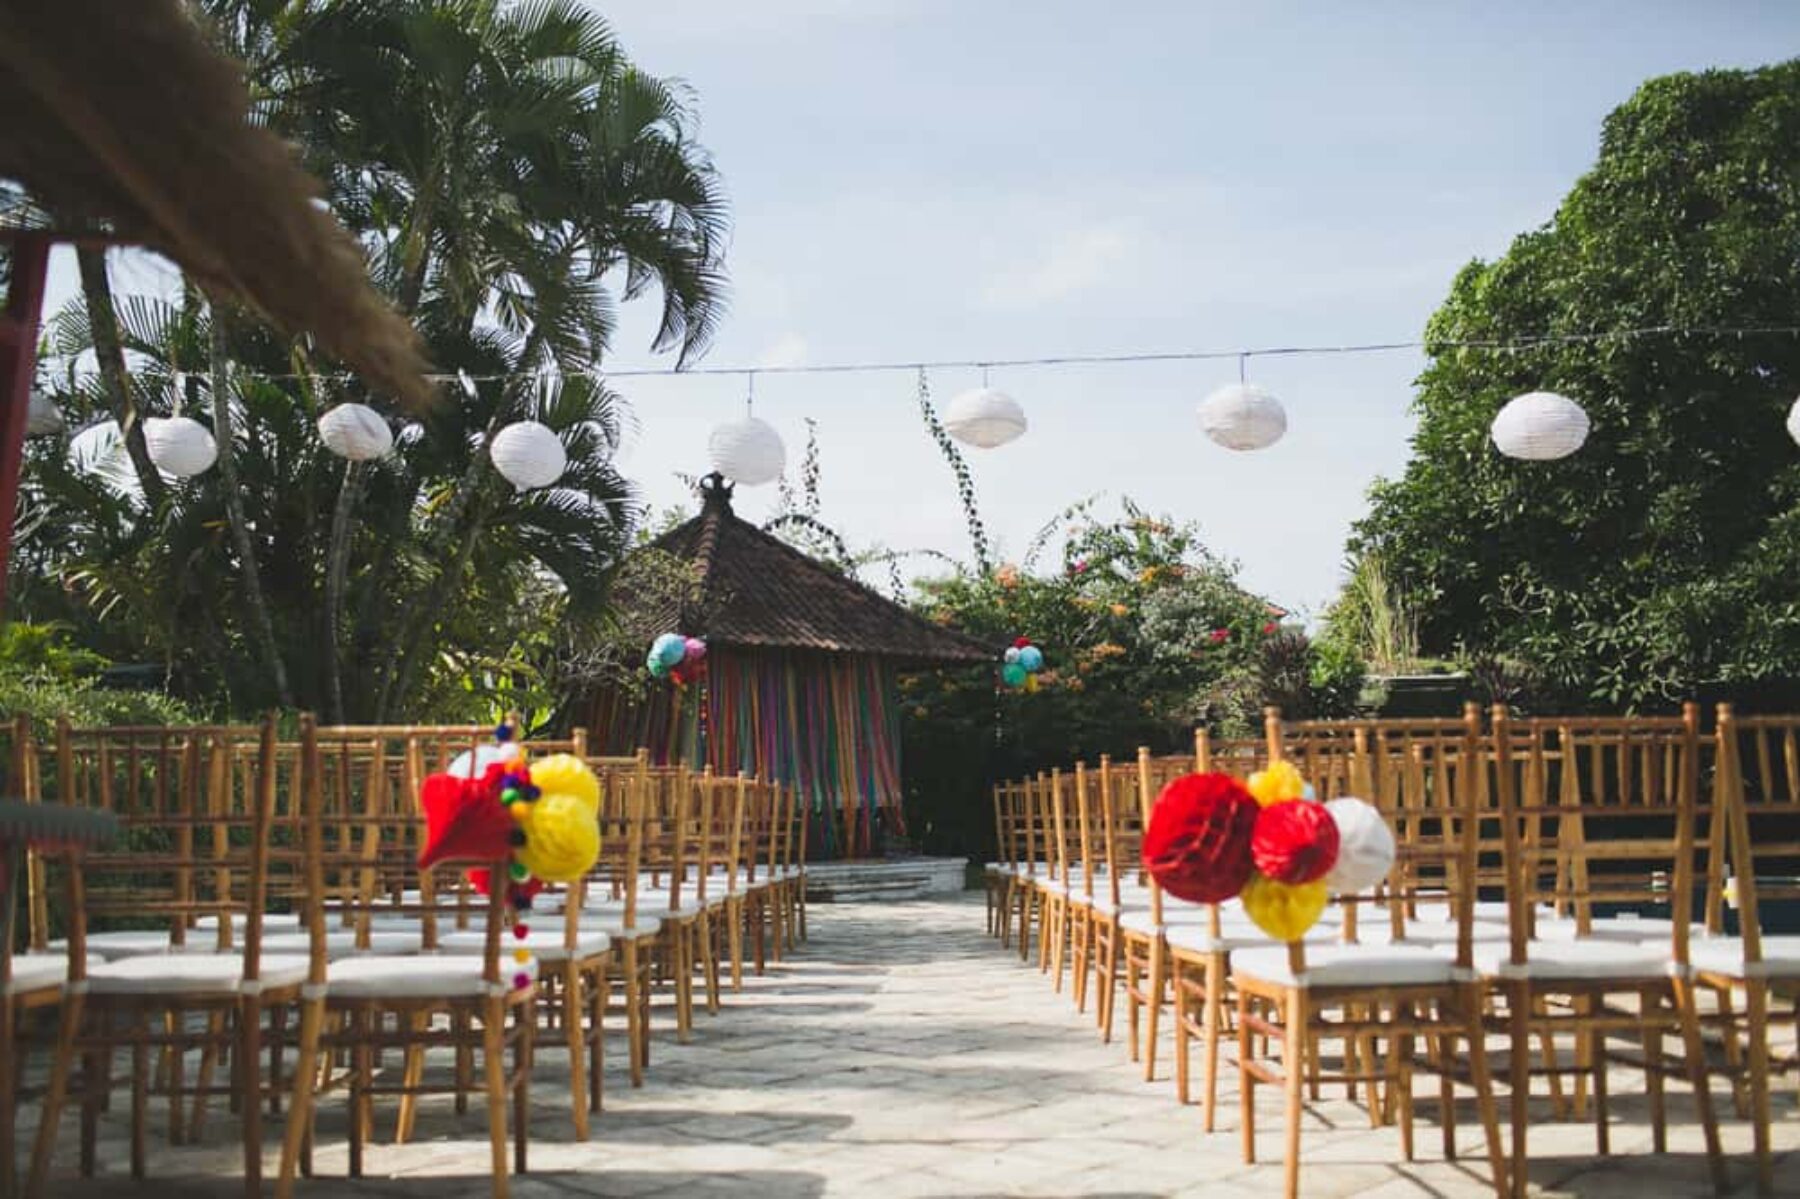 Colourful Bali wedding at Umalas / photography by Gui Jorge